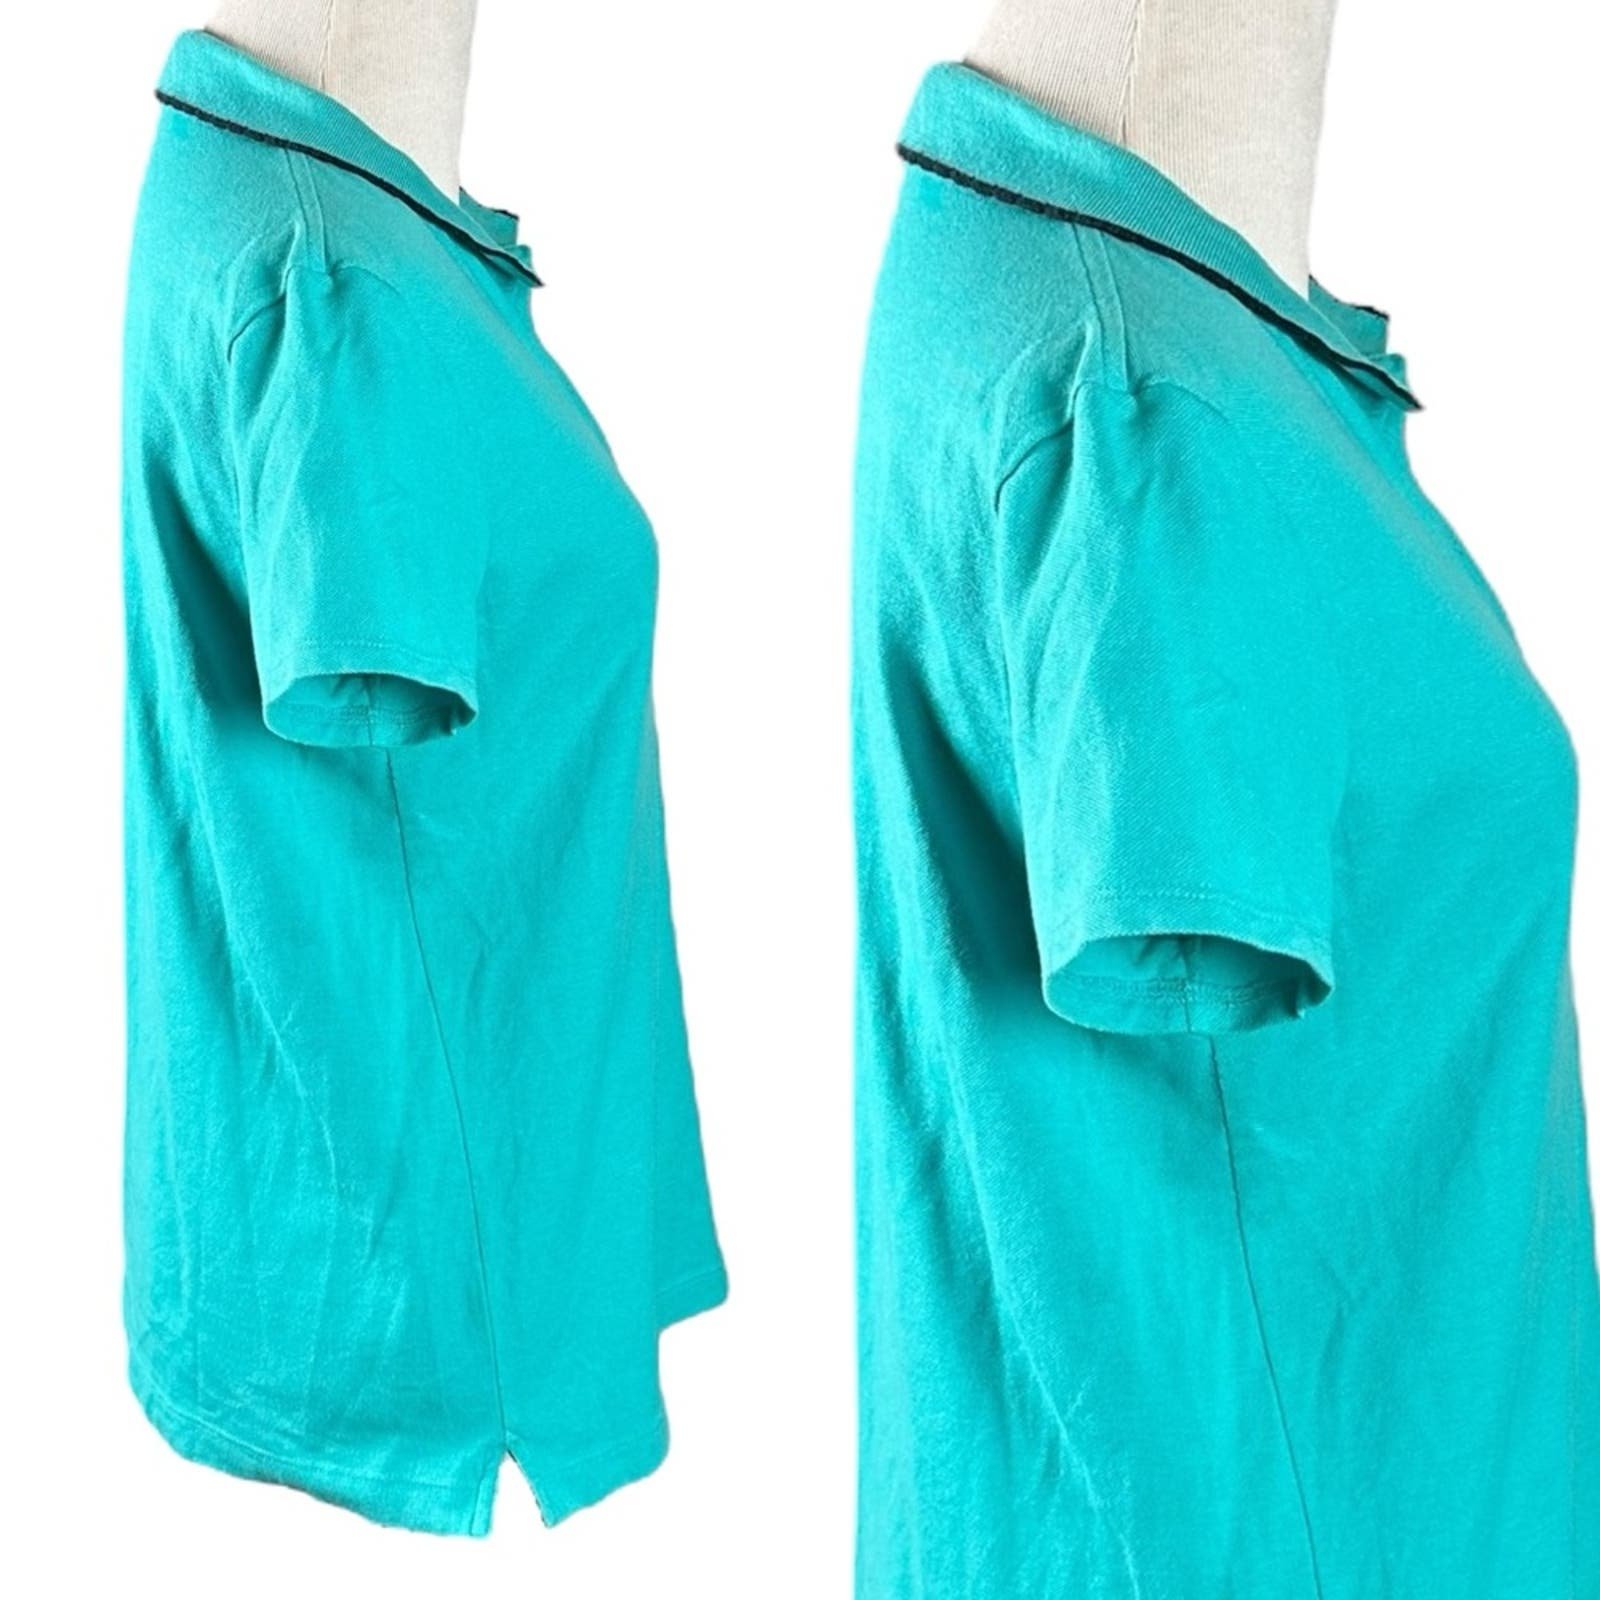 Buy Lacoste Women’s Slim Fit Stretch Pique Polo Size 42 Large Turquoise Aqua Blue KYSqQ1qim Low Price